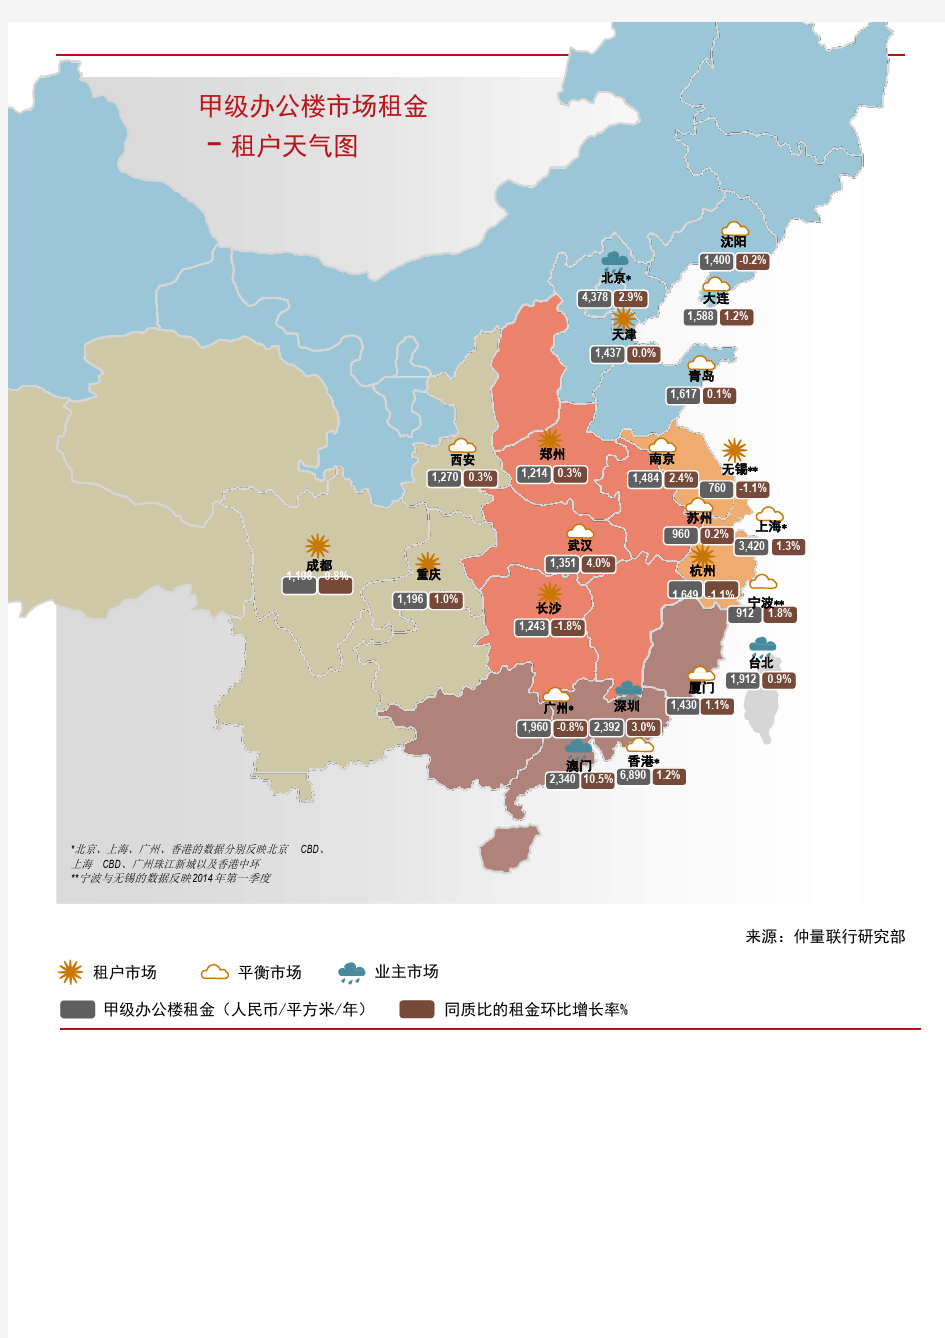 JLL 14Q2 GC Office Index CN-仲量联行-大中华-北京-写字楼-房地产-市场调研-研究分析-报告